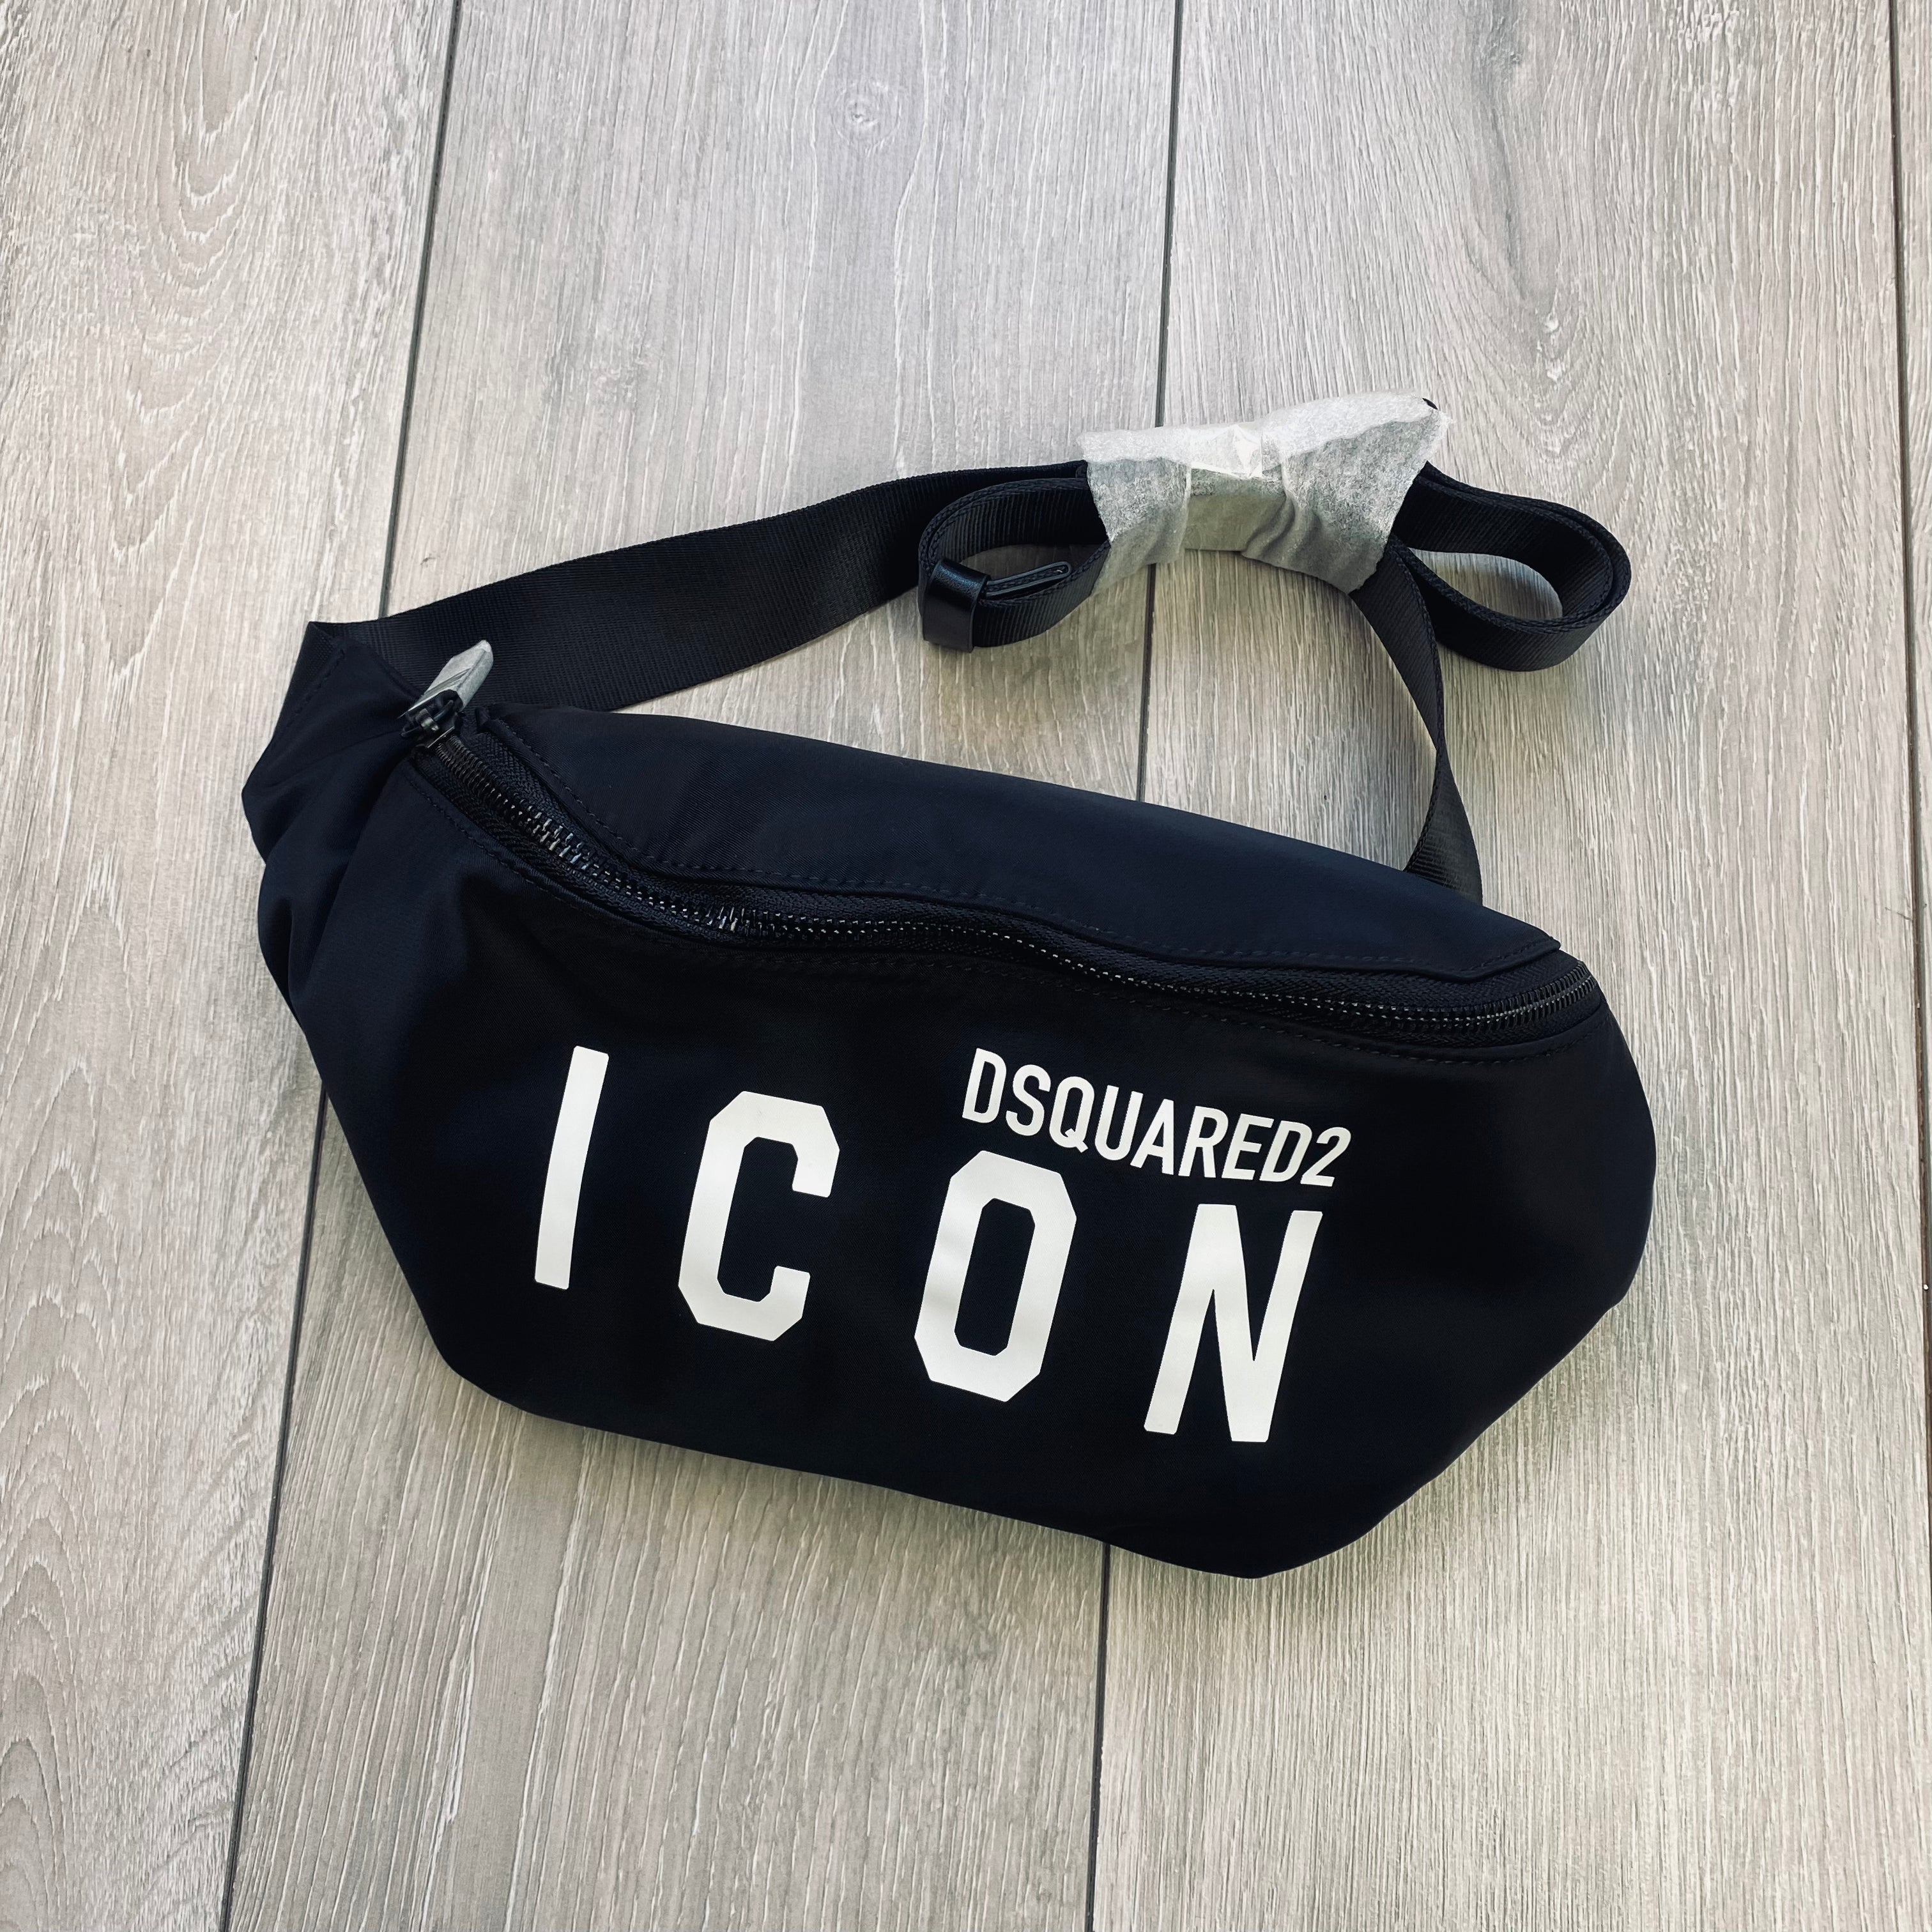 DSQUARED2 ICON Belt Bag